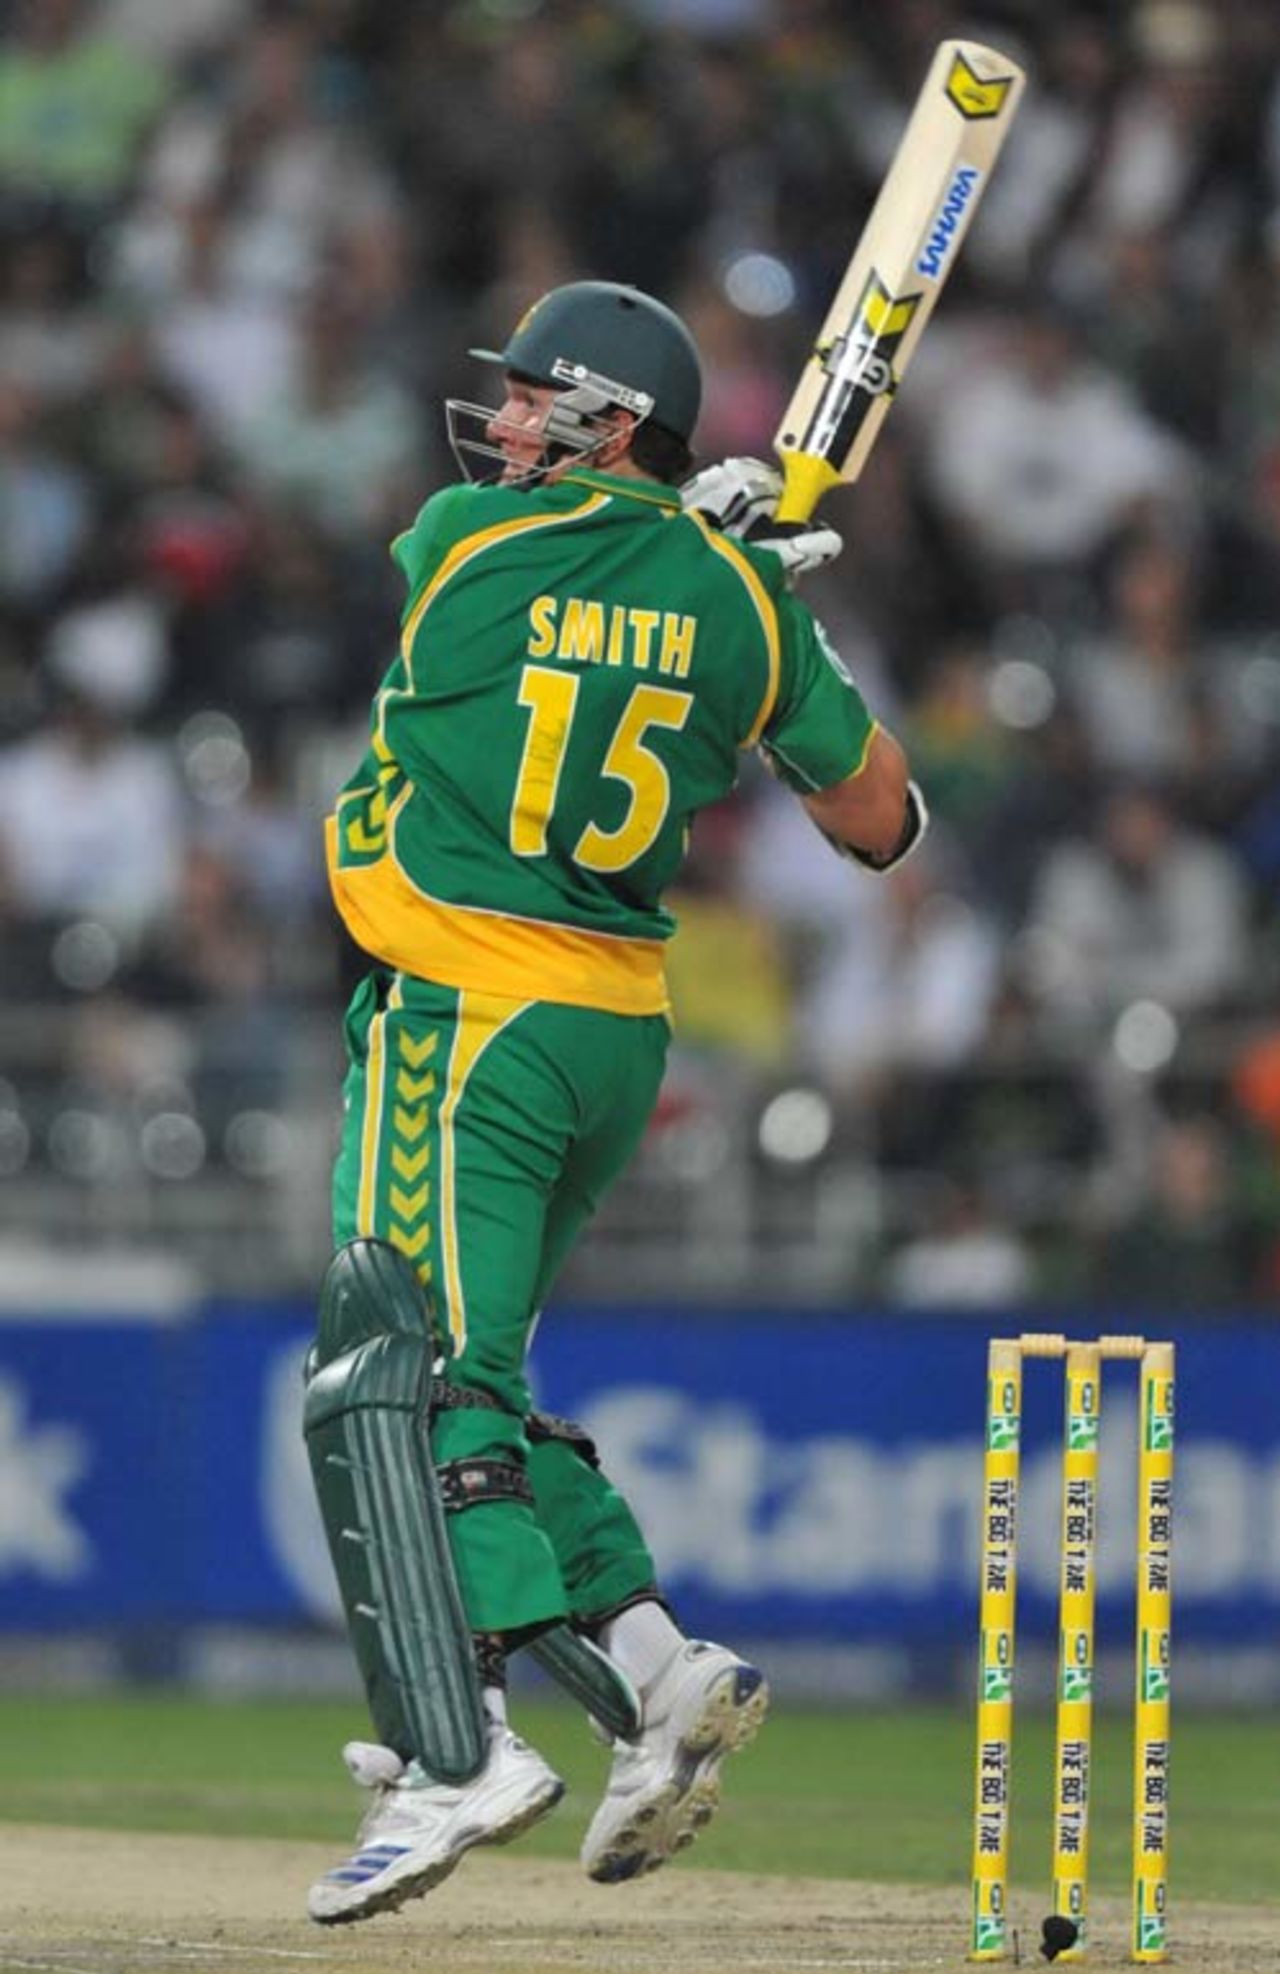 Graeme Smith powers the ball, South Africa v Australia, 5th ODI, Johannesburg, April 17, 2009